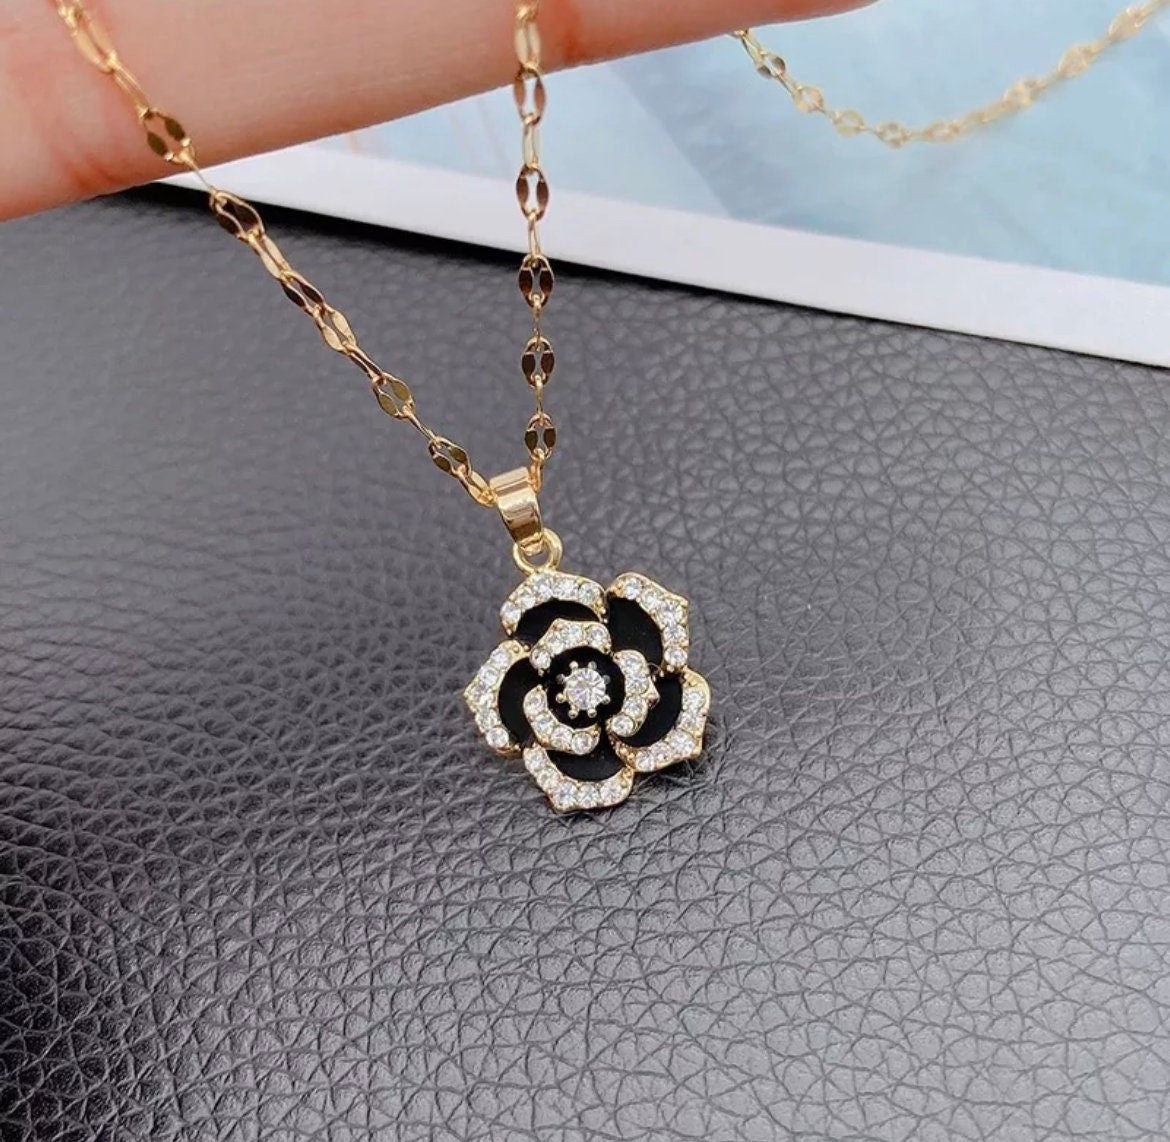 Luxury Black Camellia Flower Pendant Necklace-Camellia Necklace-Flower Necklace-Rose Flower Necklace-CZ Flower Pendant-Gold Dainty Necklace